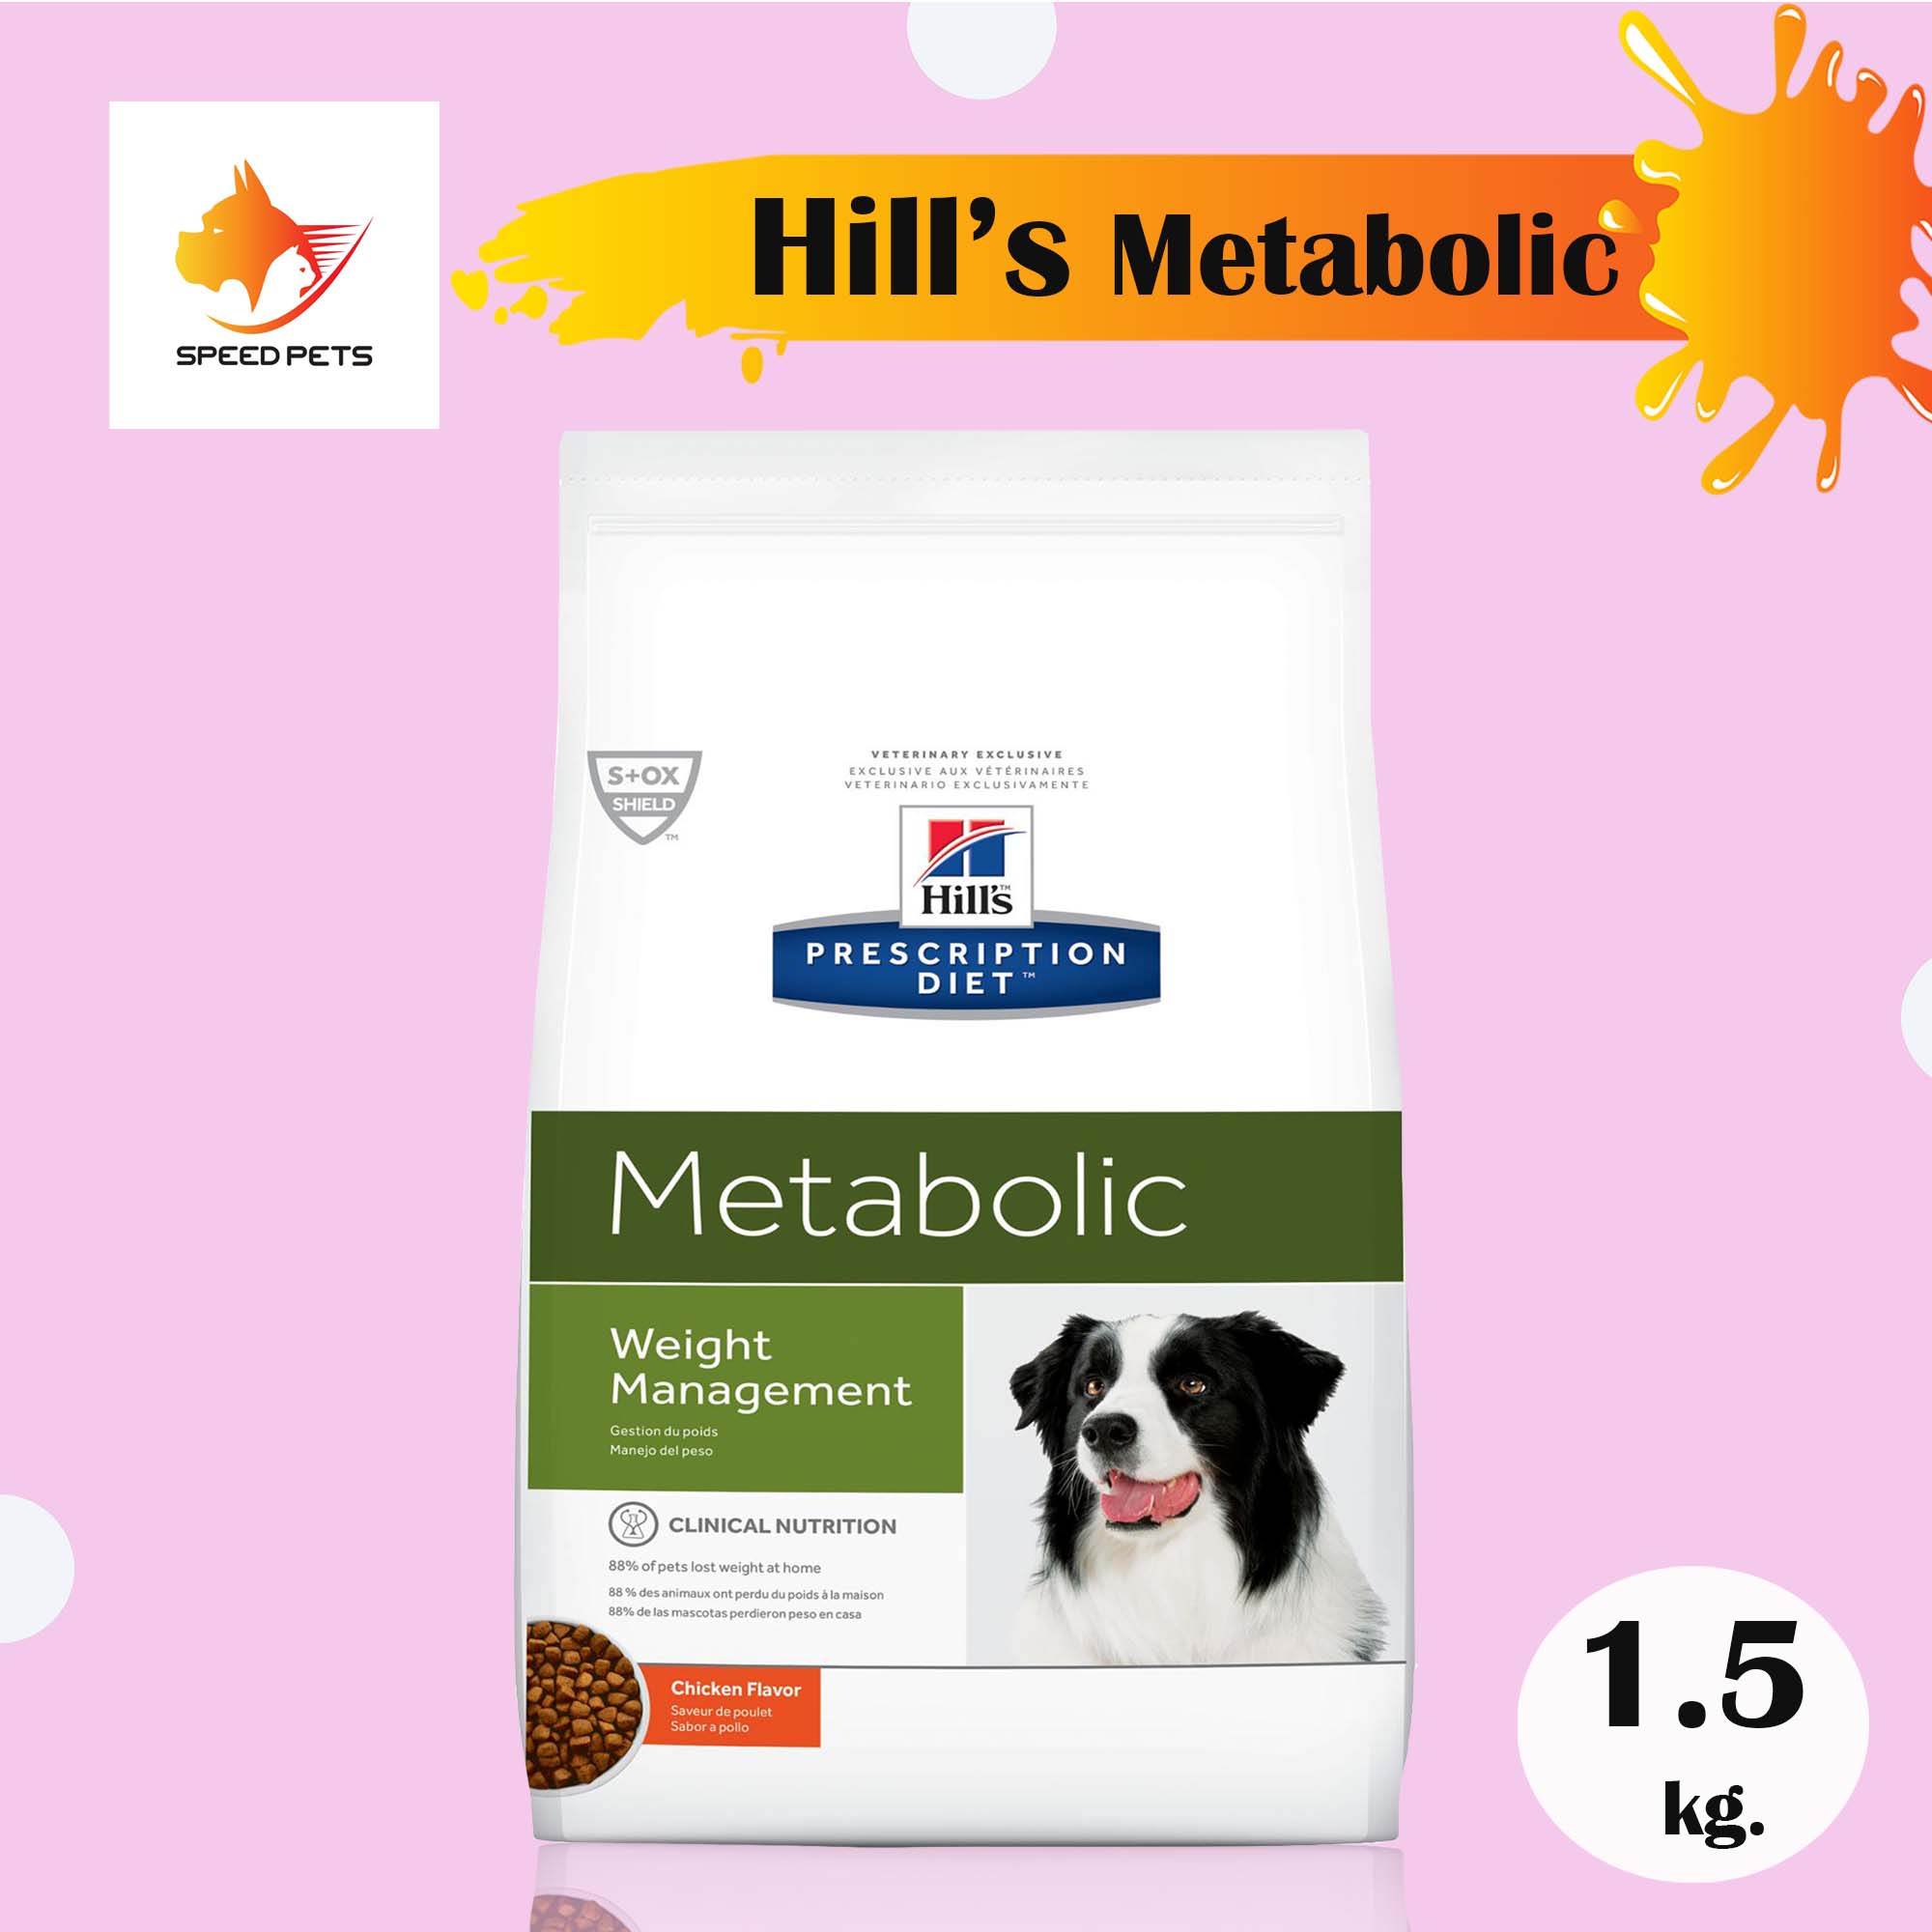 Hill's Metabolic Canine Weight Control 1.5 kg ฮิลล์ อาหารสุนัข ควบคุมน้ำหนัก ลดน้ำหนัก ขนาด 1.5 กก